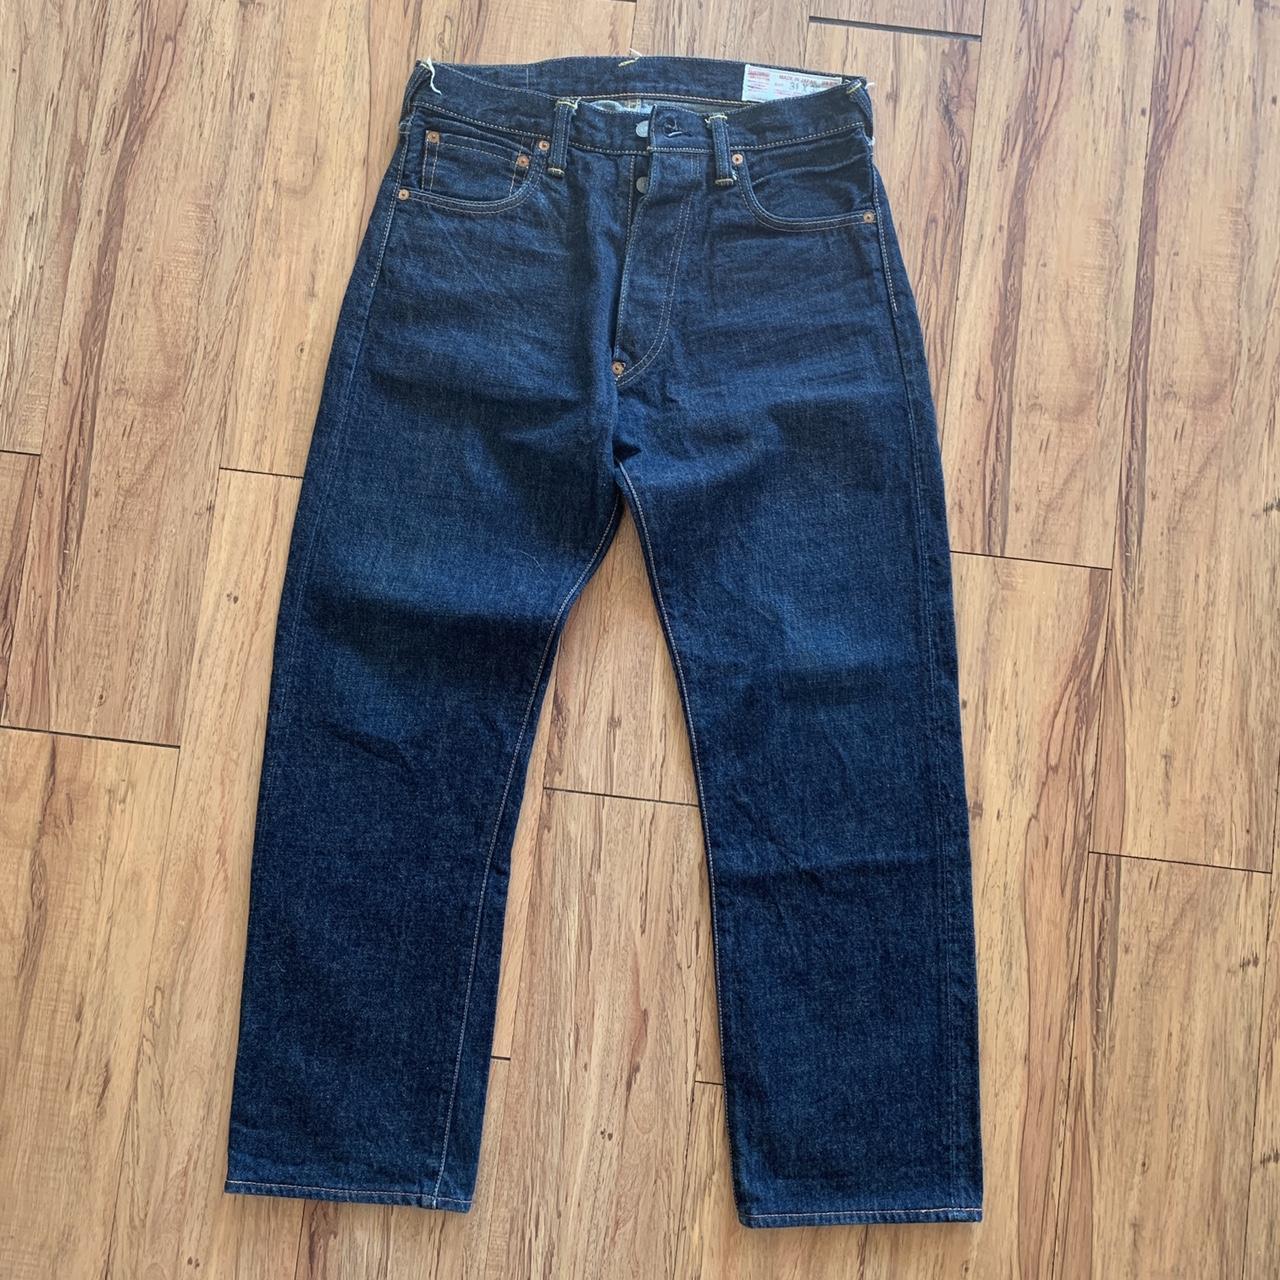 Jean Vintage - Yamane jeans size 31 X 35 - Depop